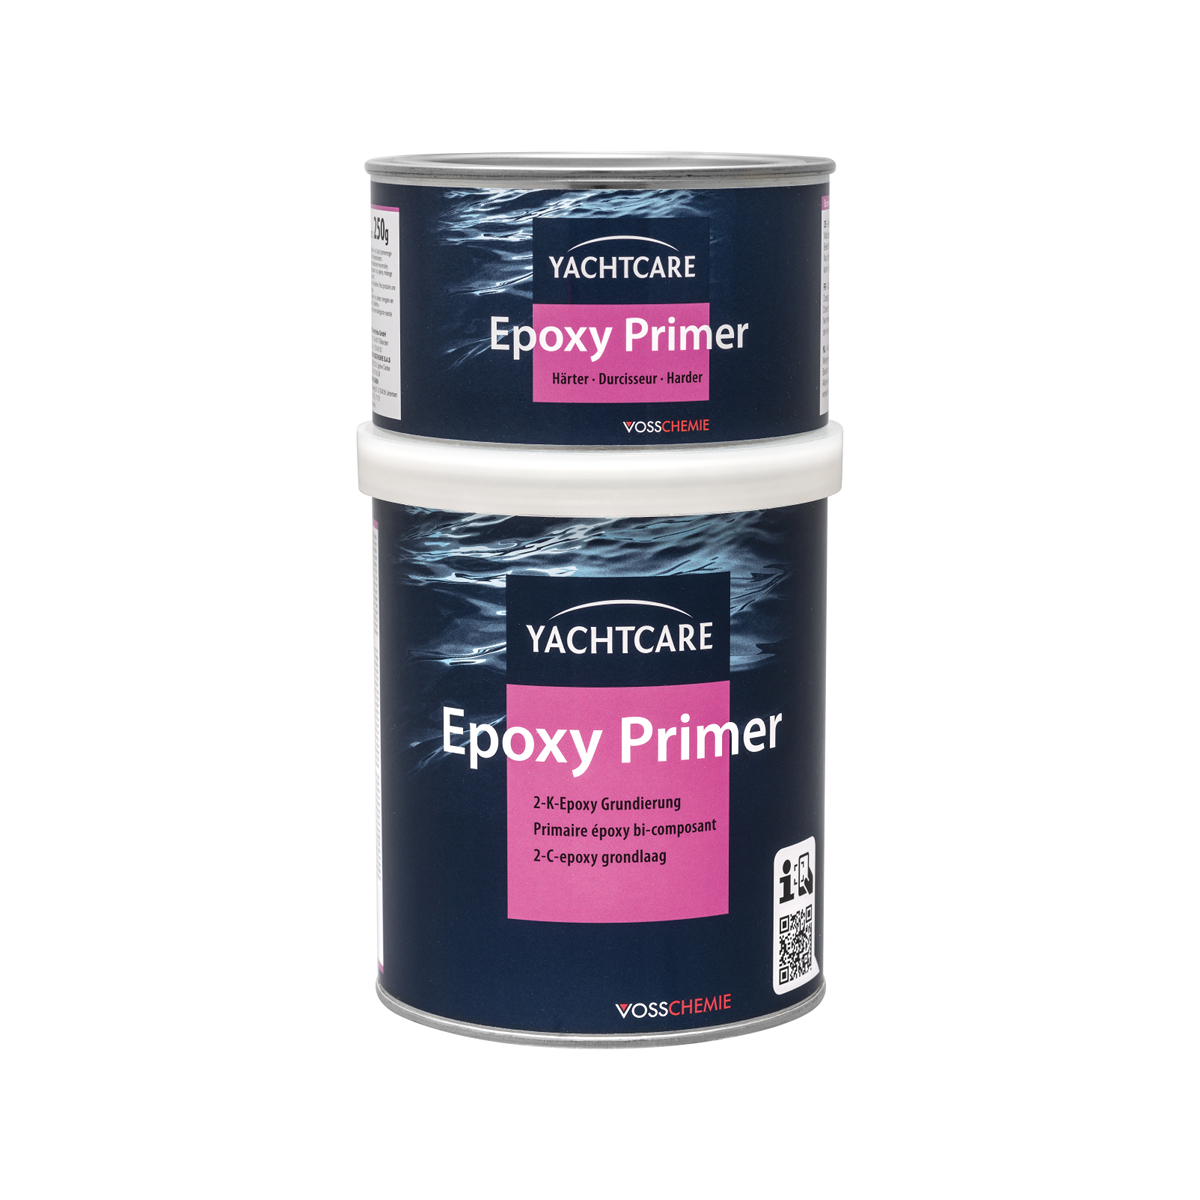 Yachtcare Epoxy Primer 2-C-epoxy grondlaag - wit, 2,25l